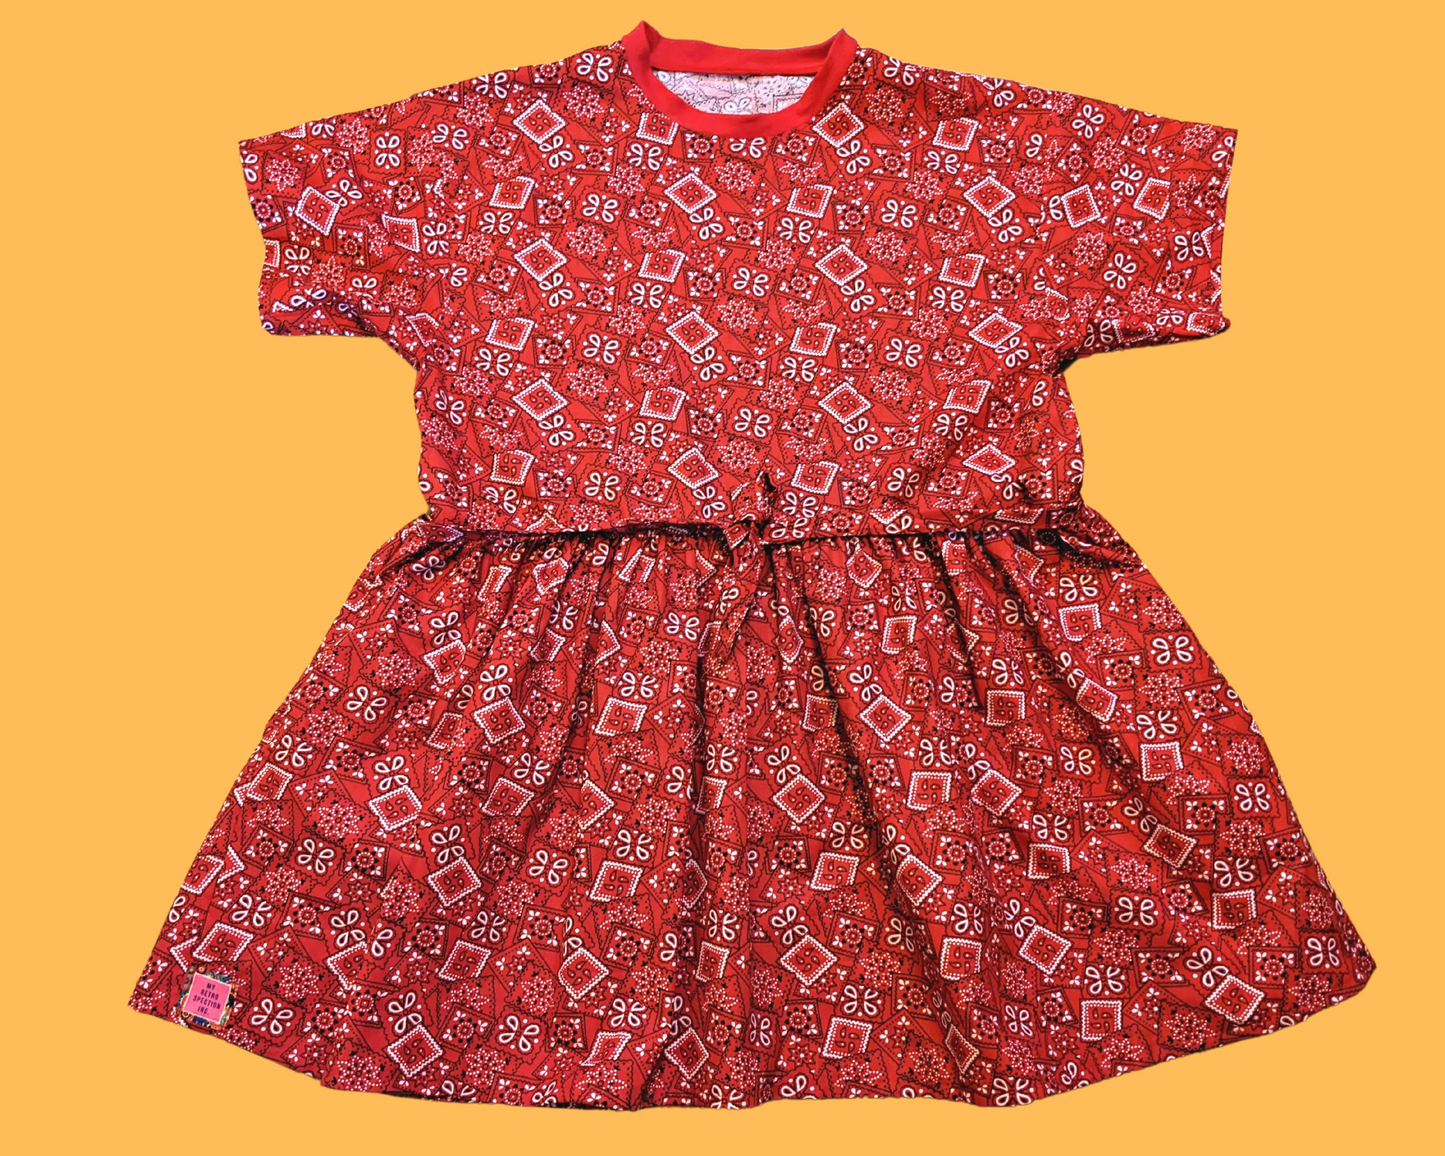 Handmade, Upcycled Red Paisley, Bandana Styled Fabric T-Shirt Dress Fits S-M-L-XL